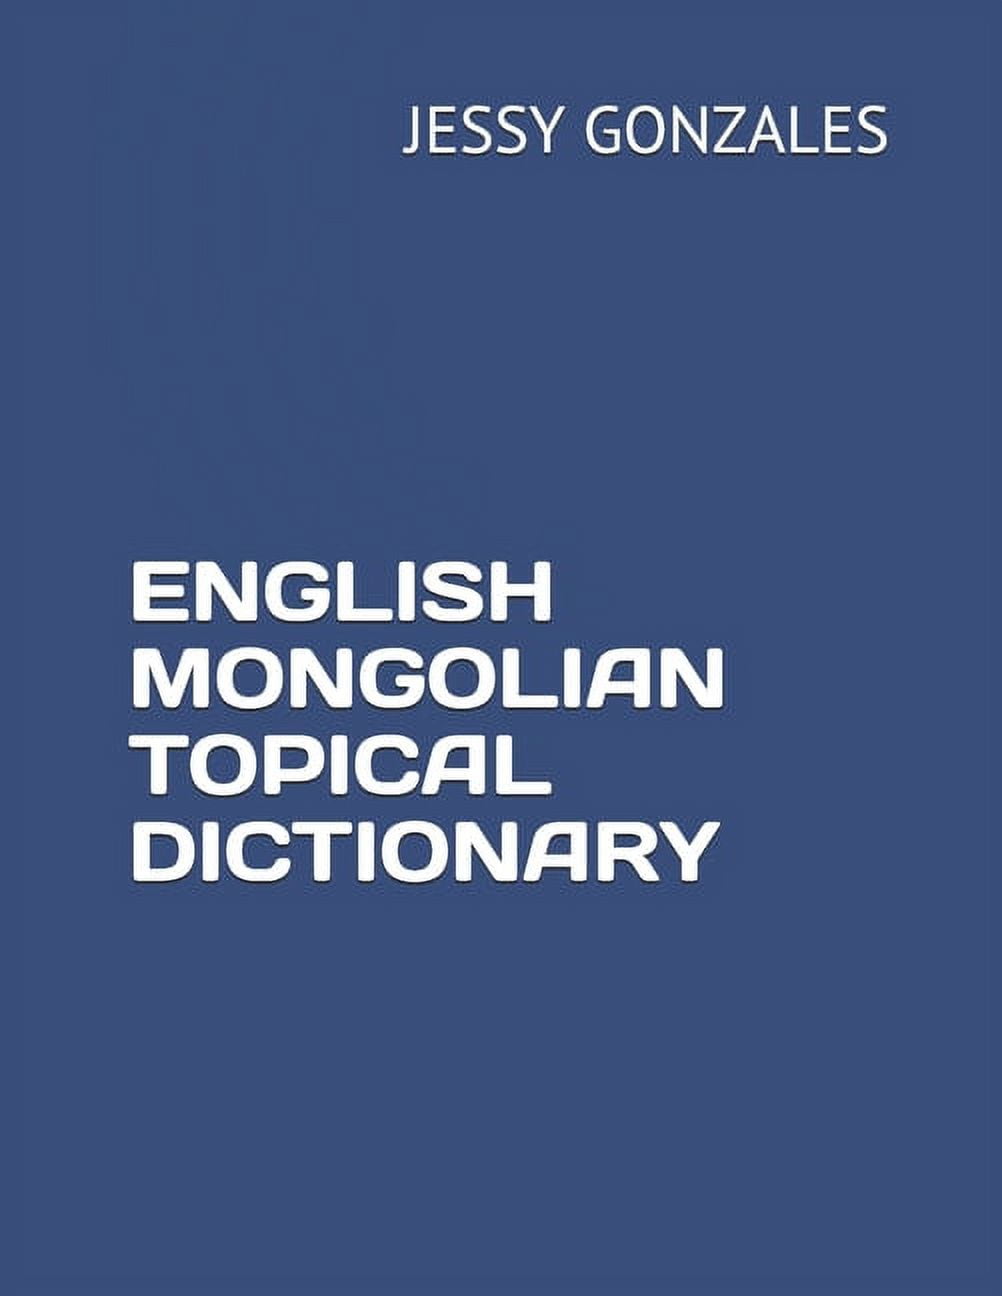 English Mongolian Topical Dictionary - Walmart.com